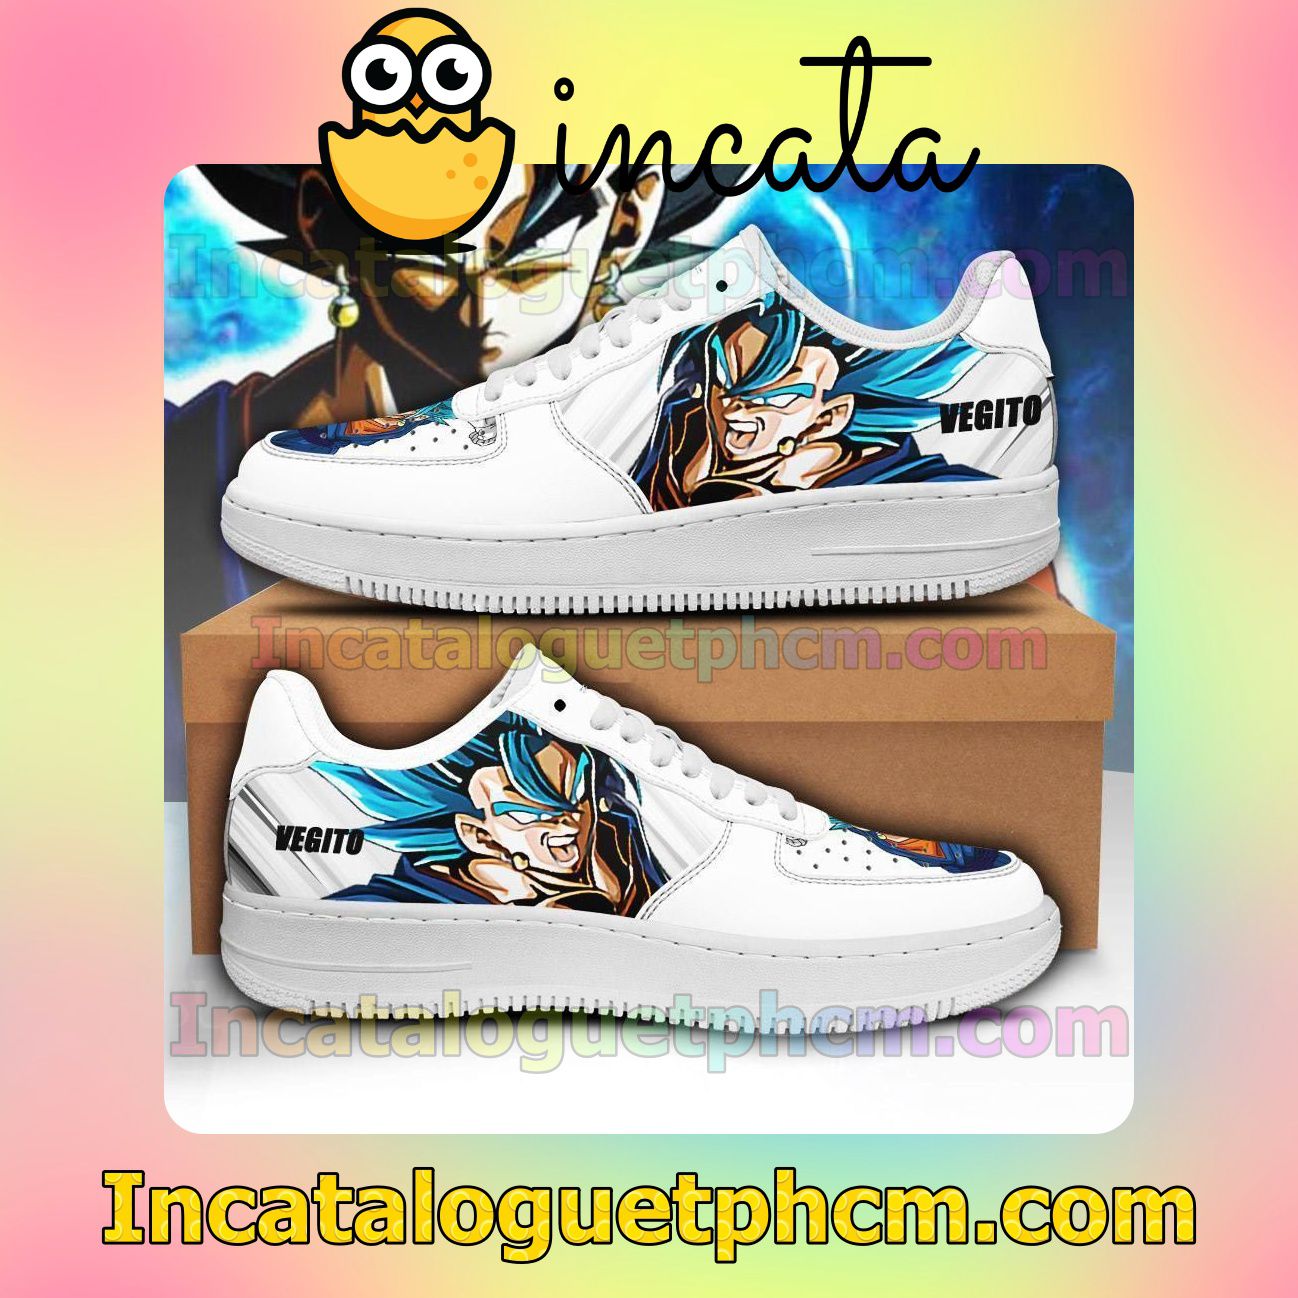 Vegito Dragon Ball Z Anime Nike Low Shoes Sneakers